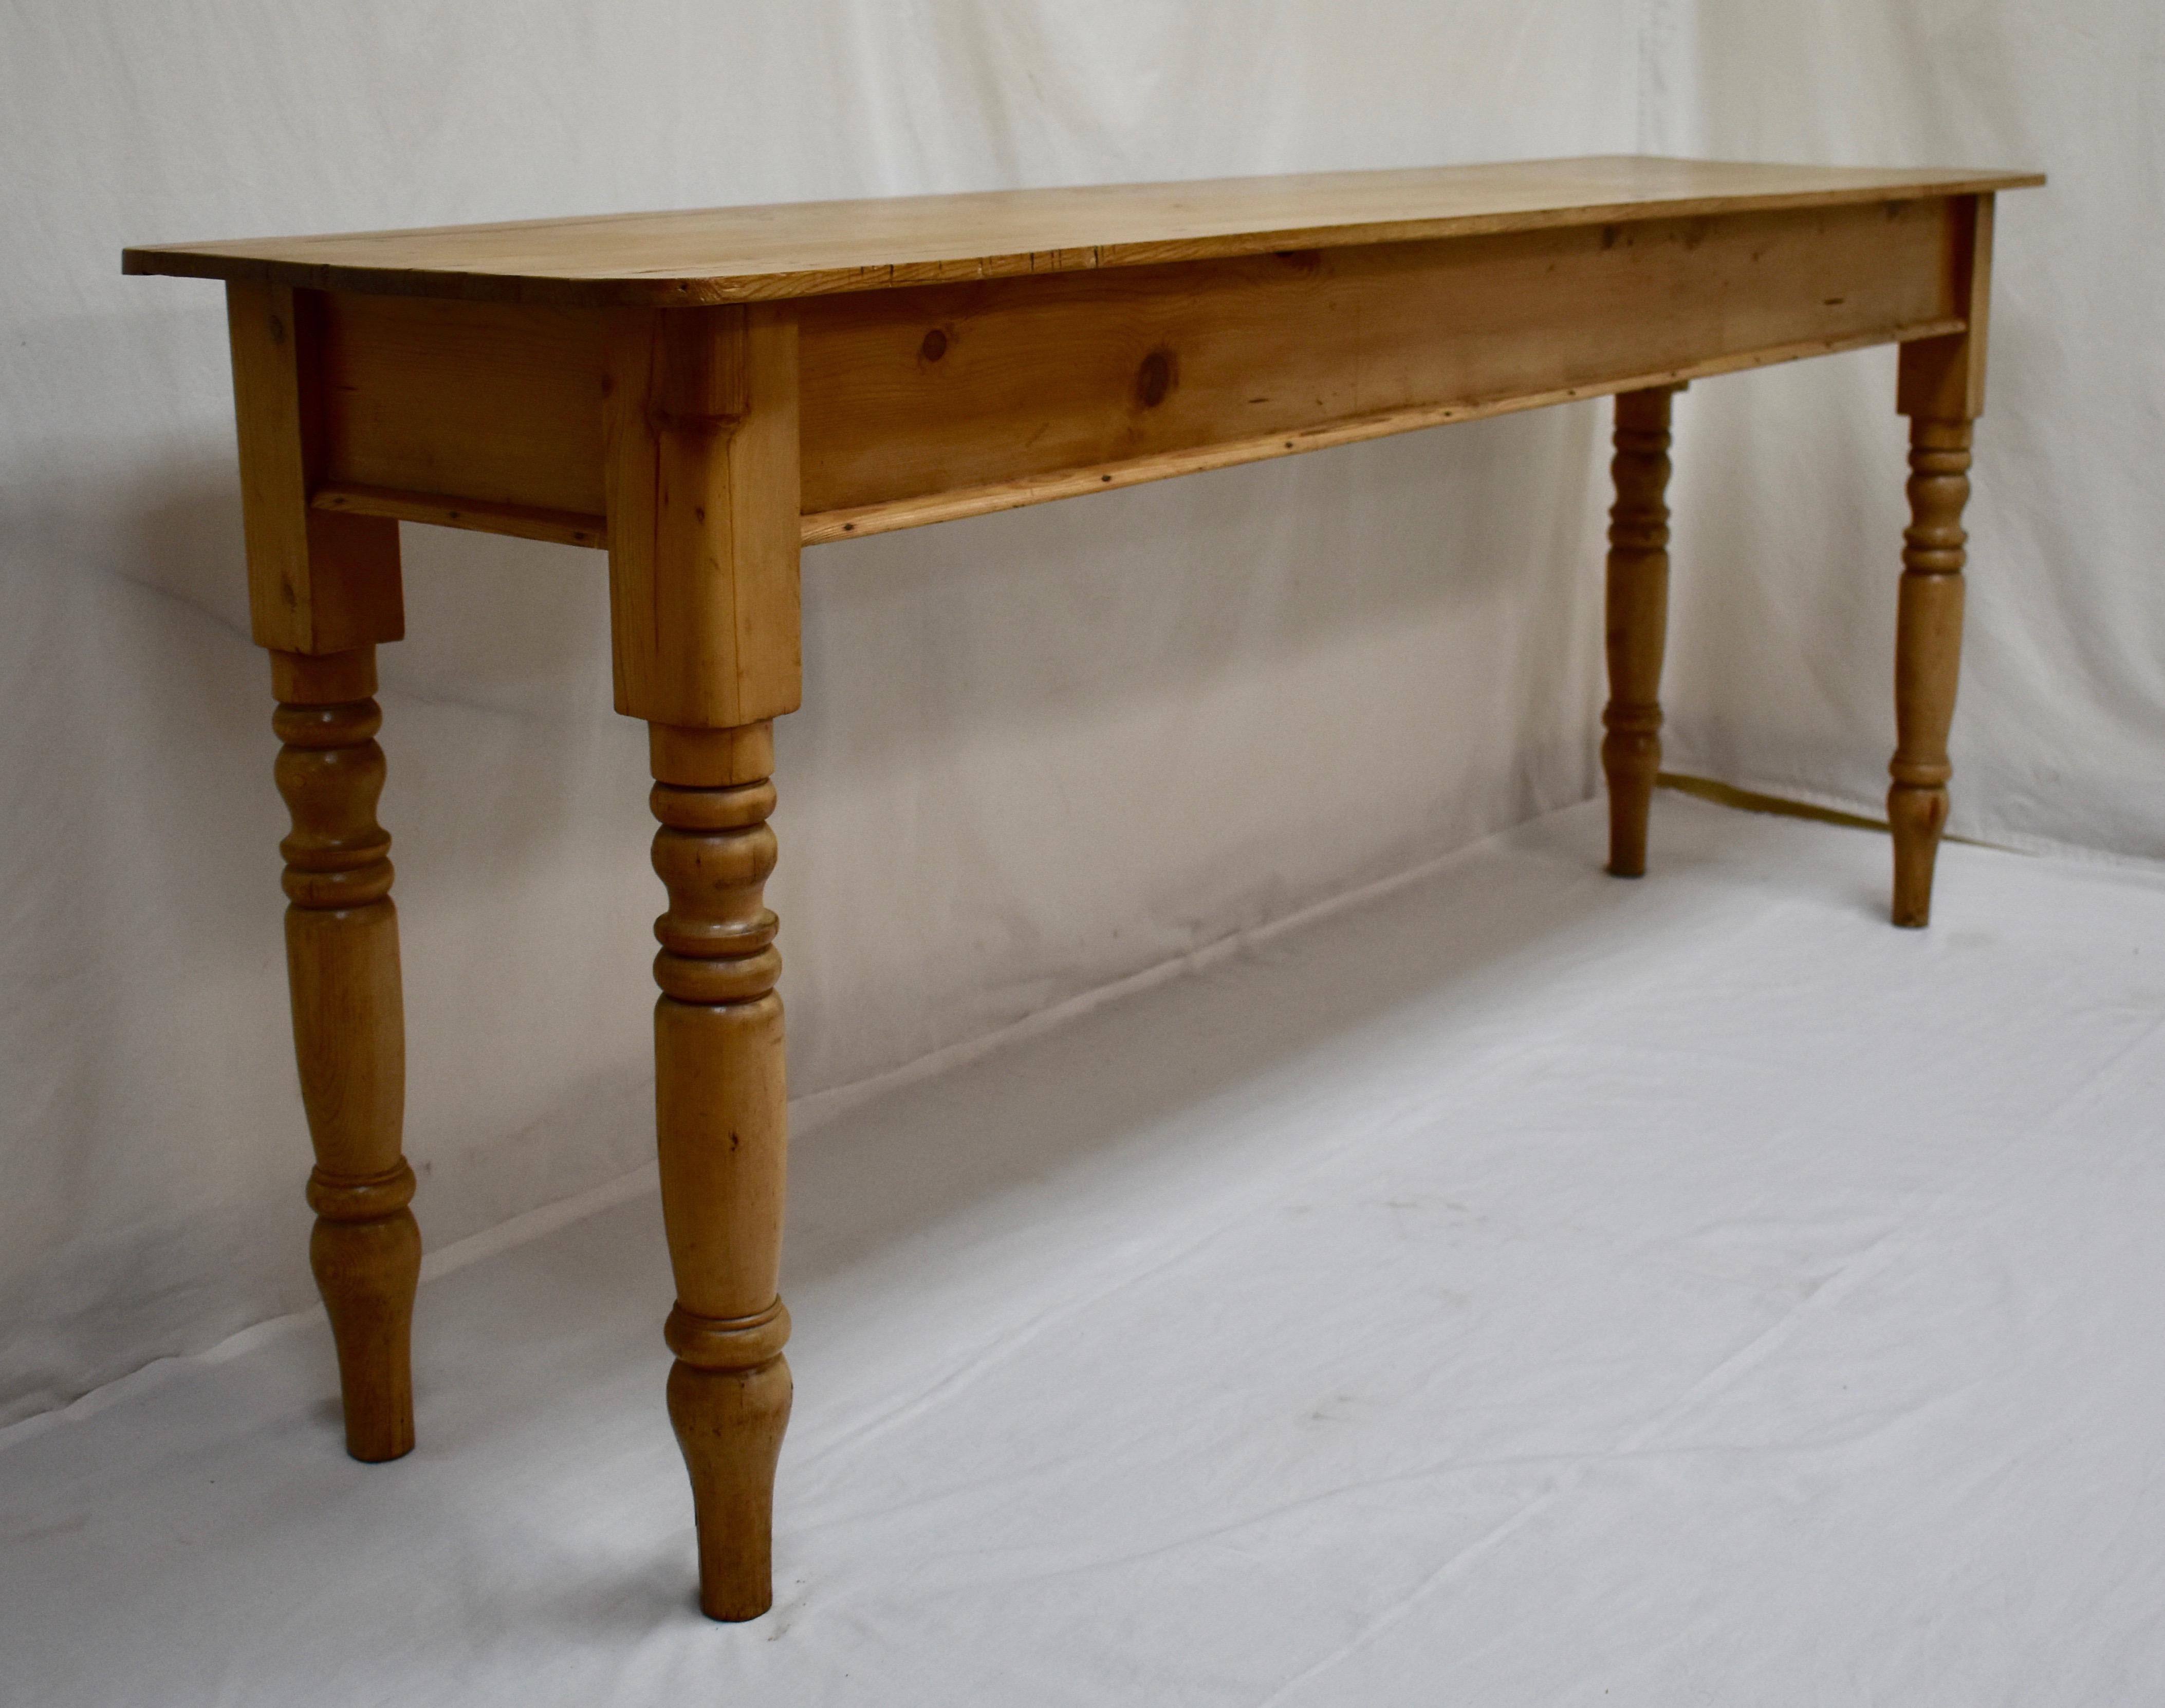 Polished English Pine Turned Leg Side Table